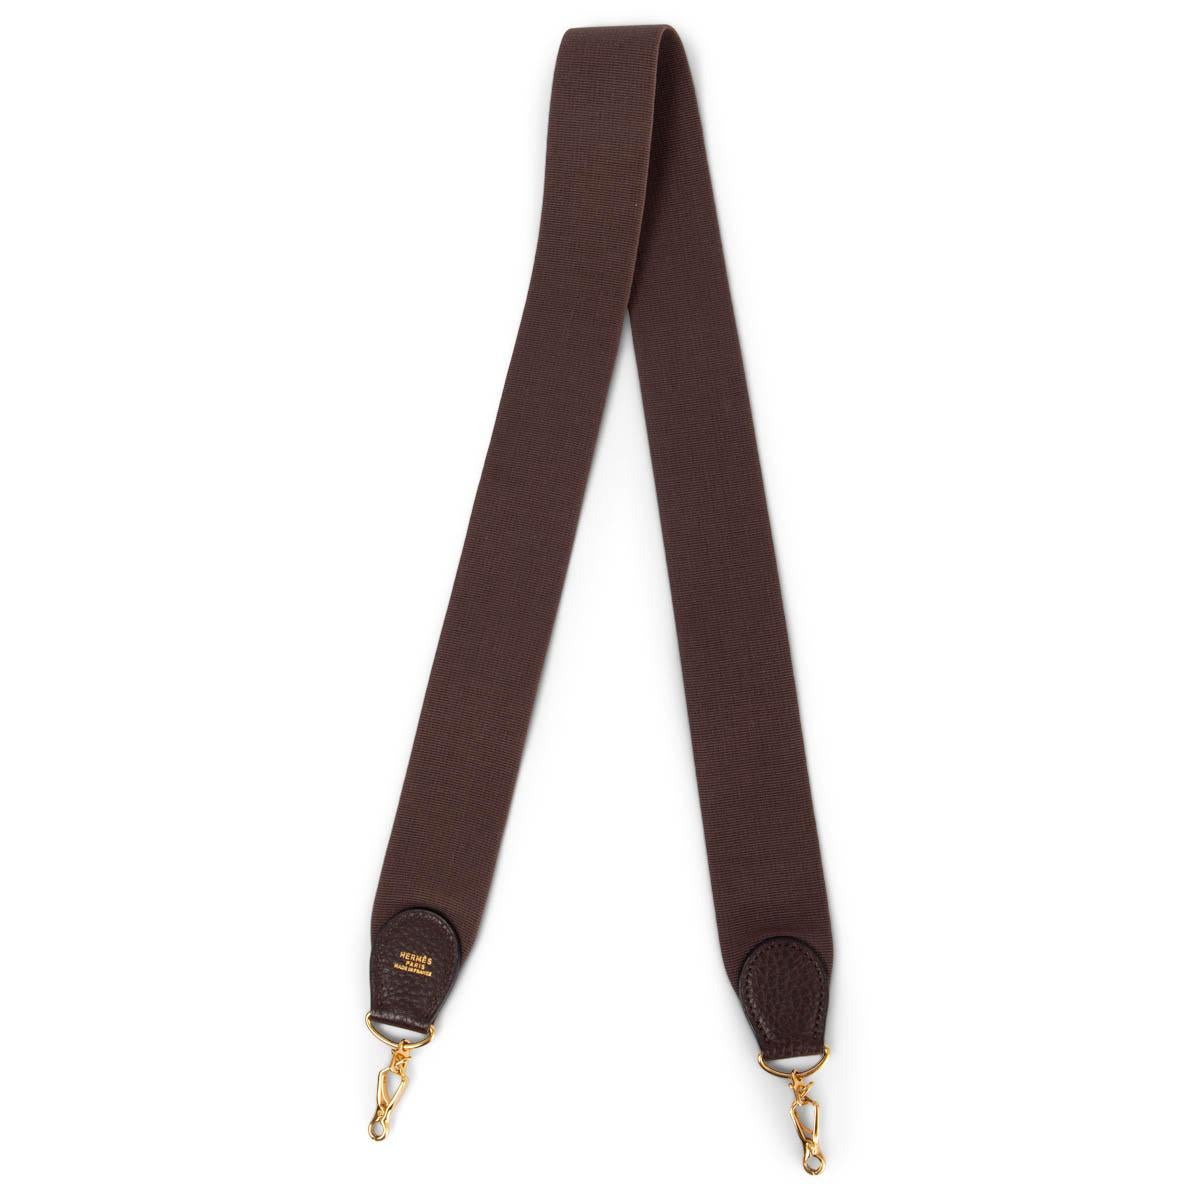 HERMES Ebene brown leather & canvas SANGLE KELLY 50mm Bag Strap